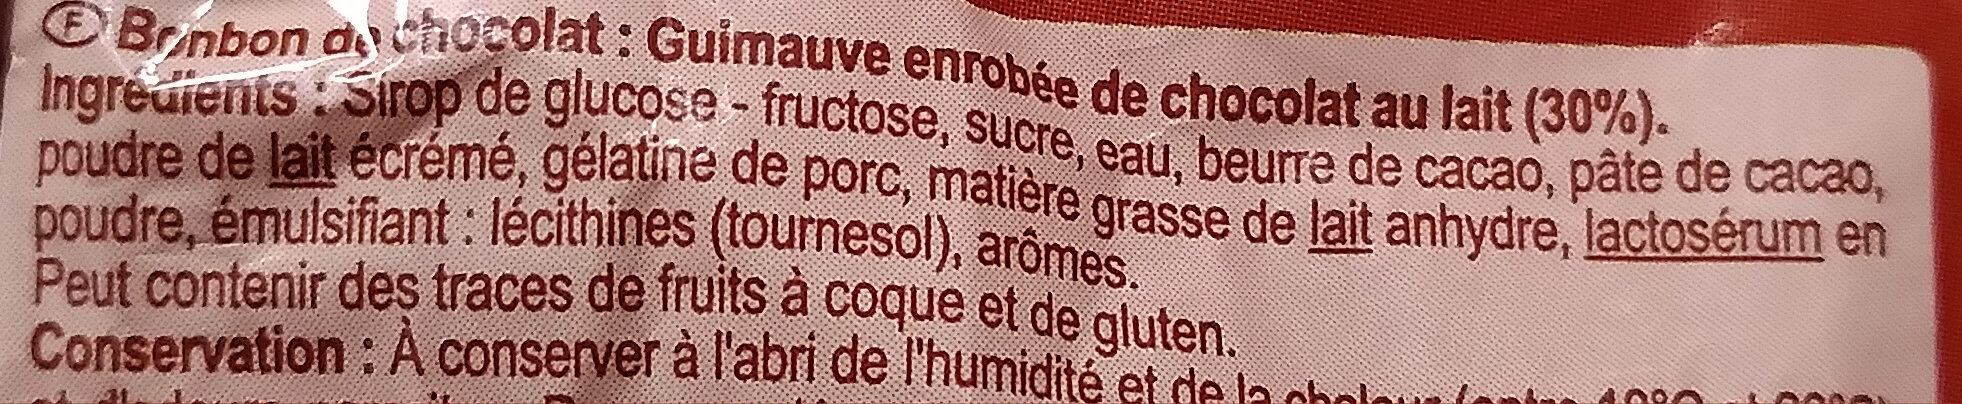 Nounours guimauve - Ingredienti - fr